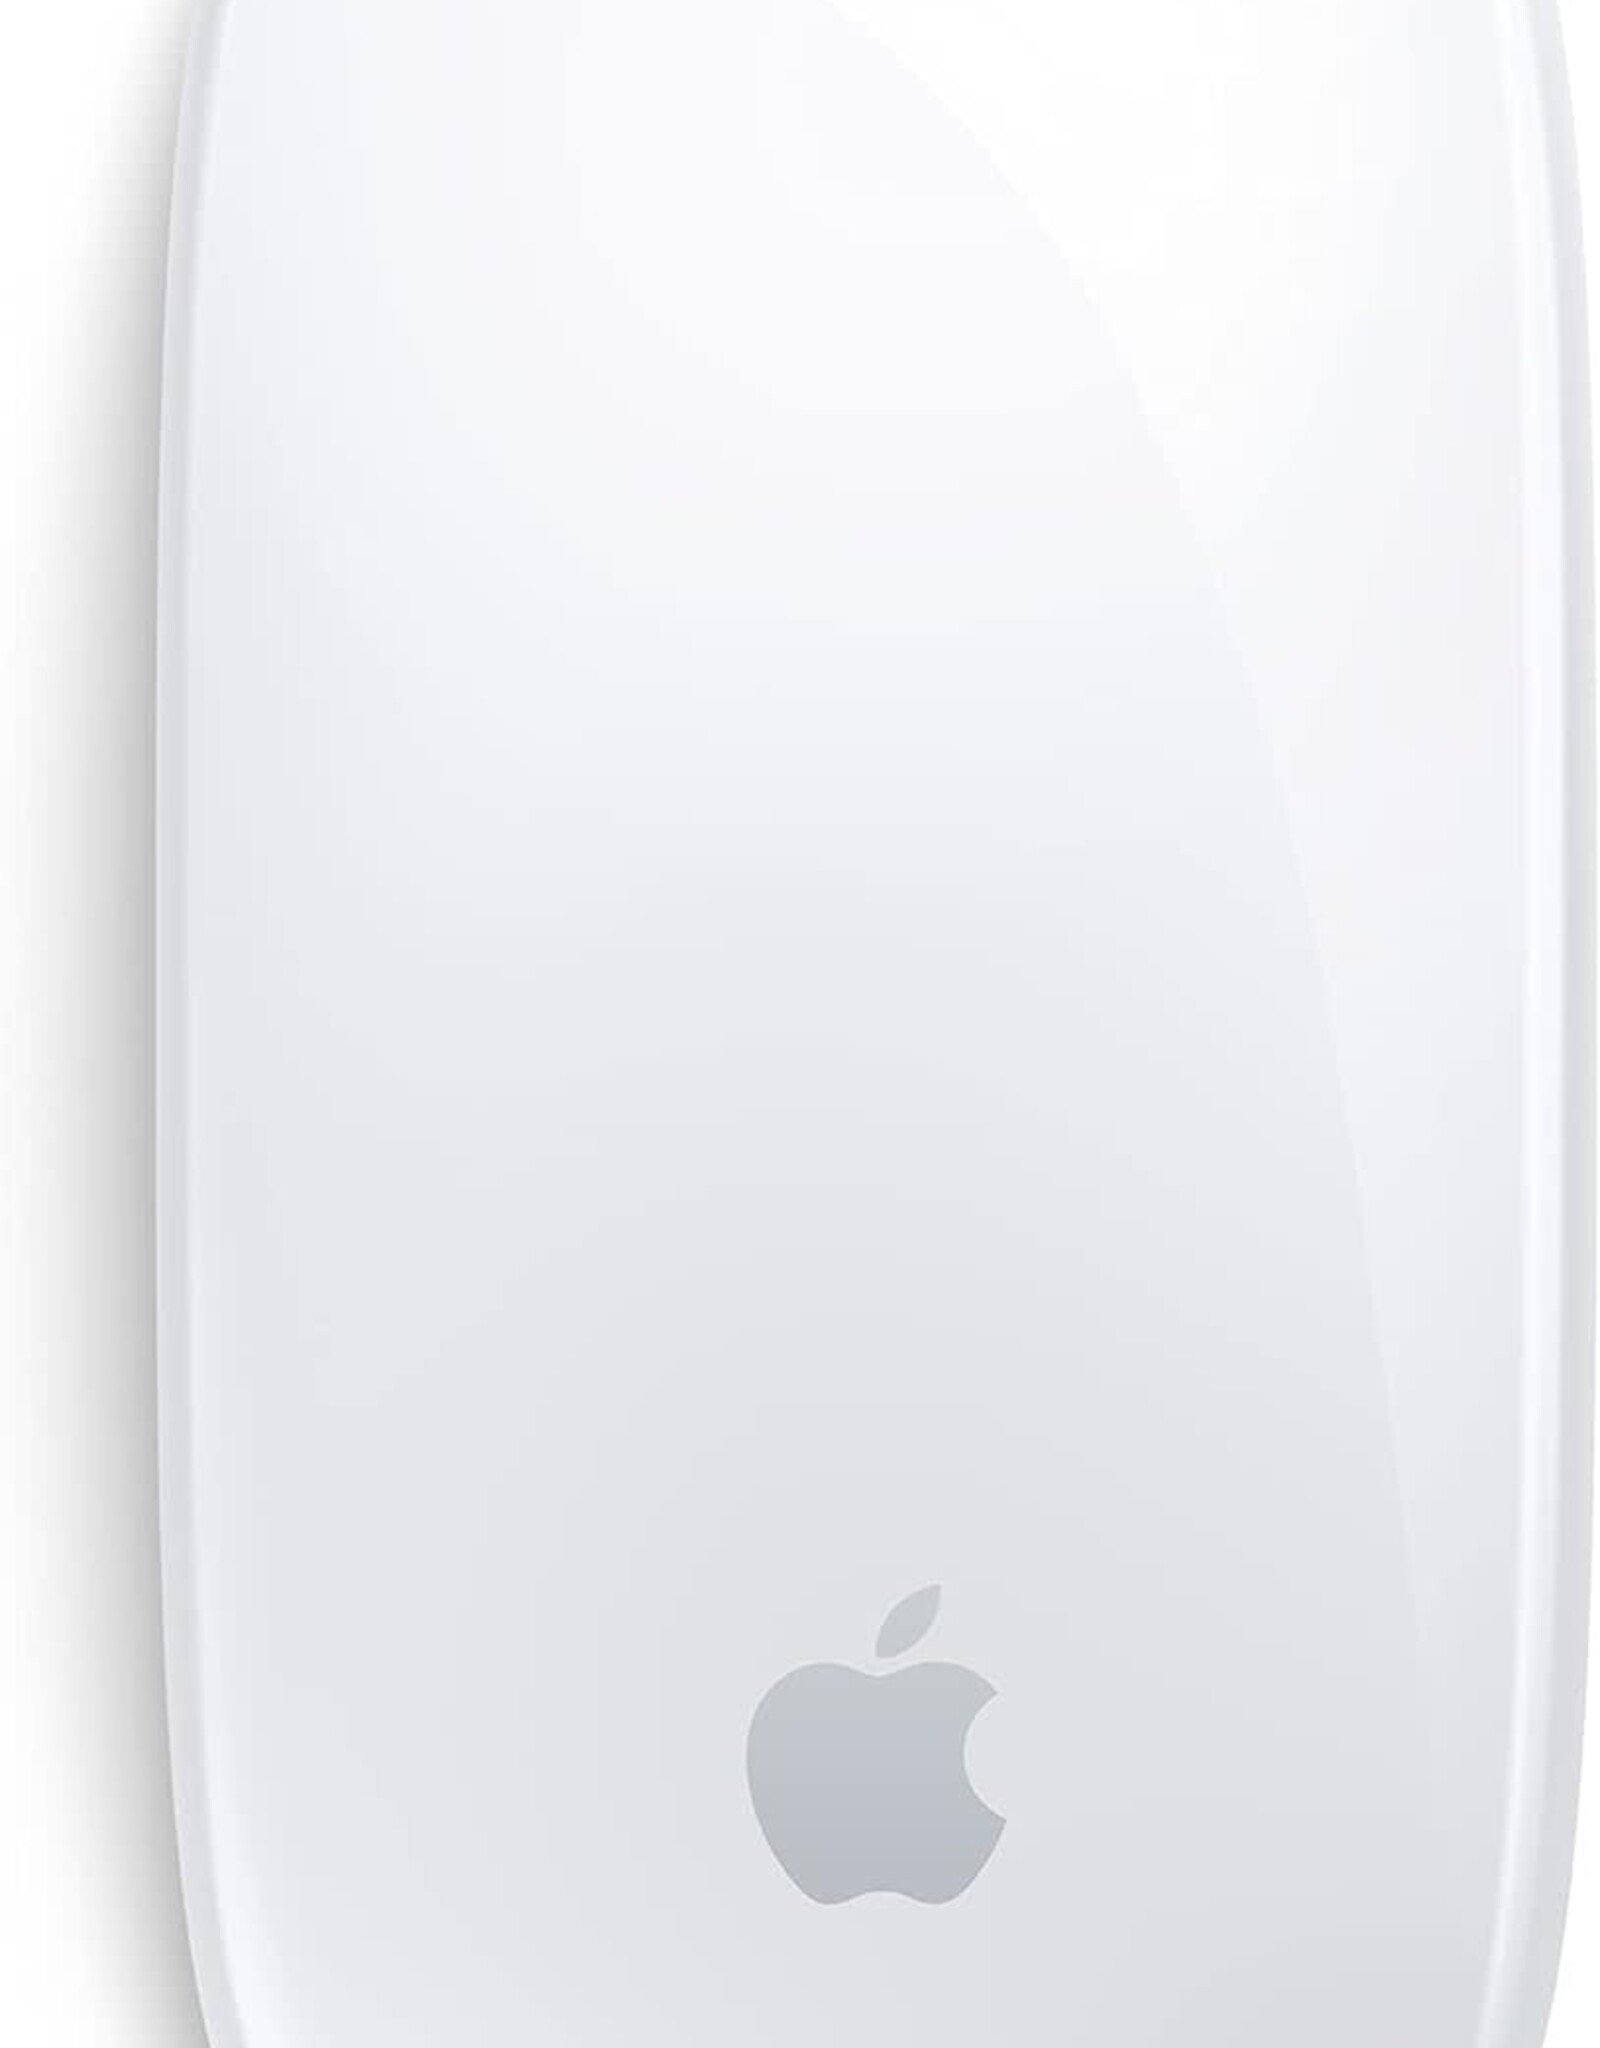 Apple Apple Magic Mouse